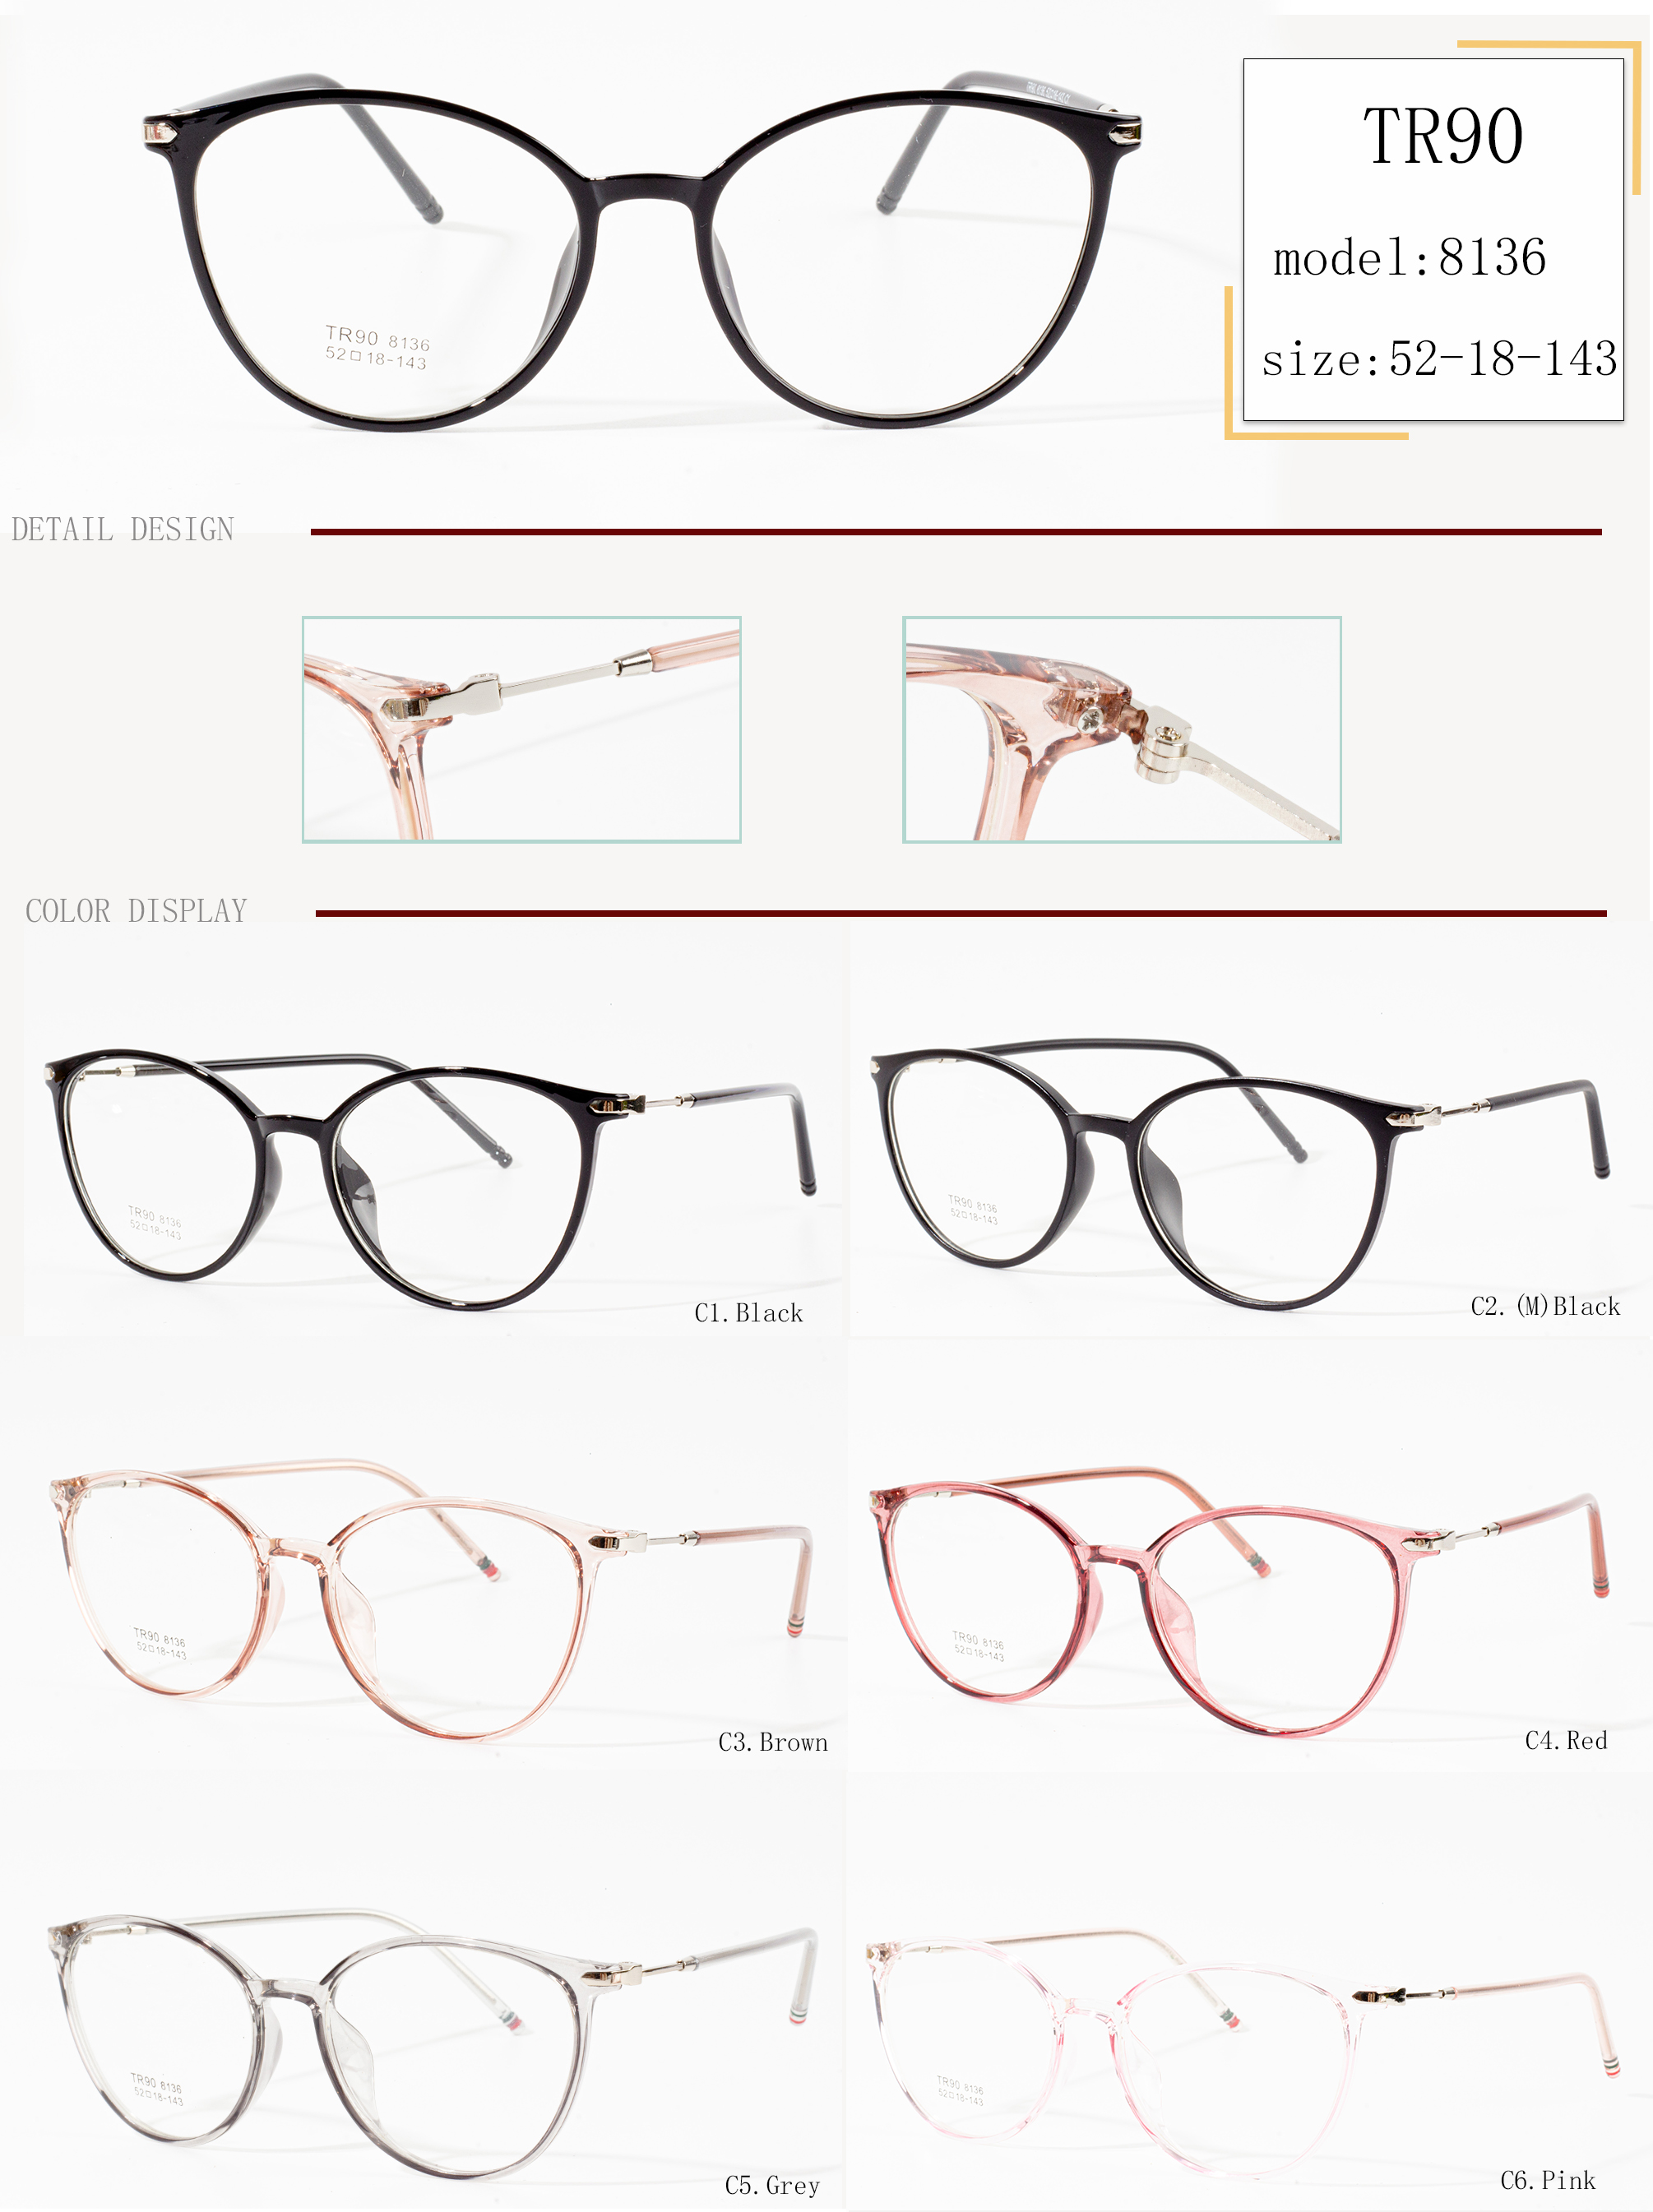 montature per occhiali flessibili